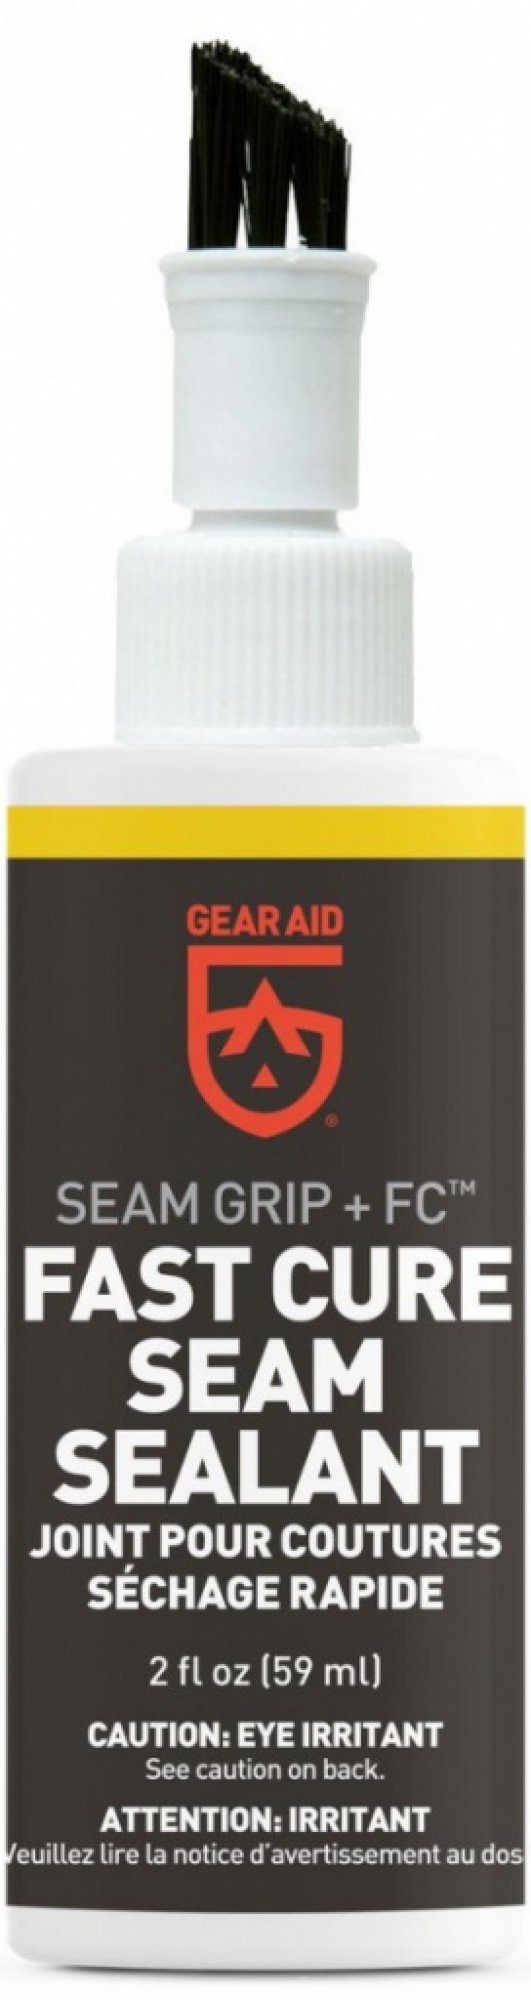 Gear Aid Seam Grip + FC 60 ml.jpg